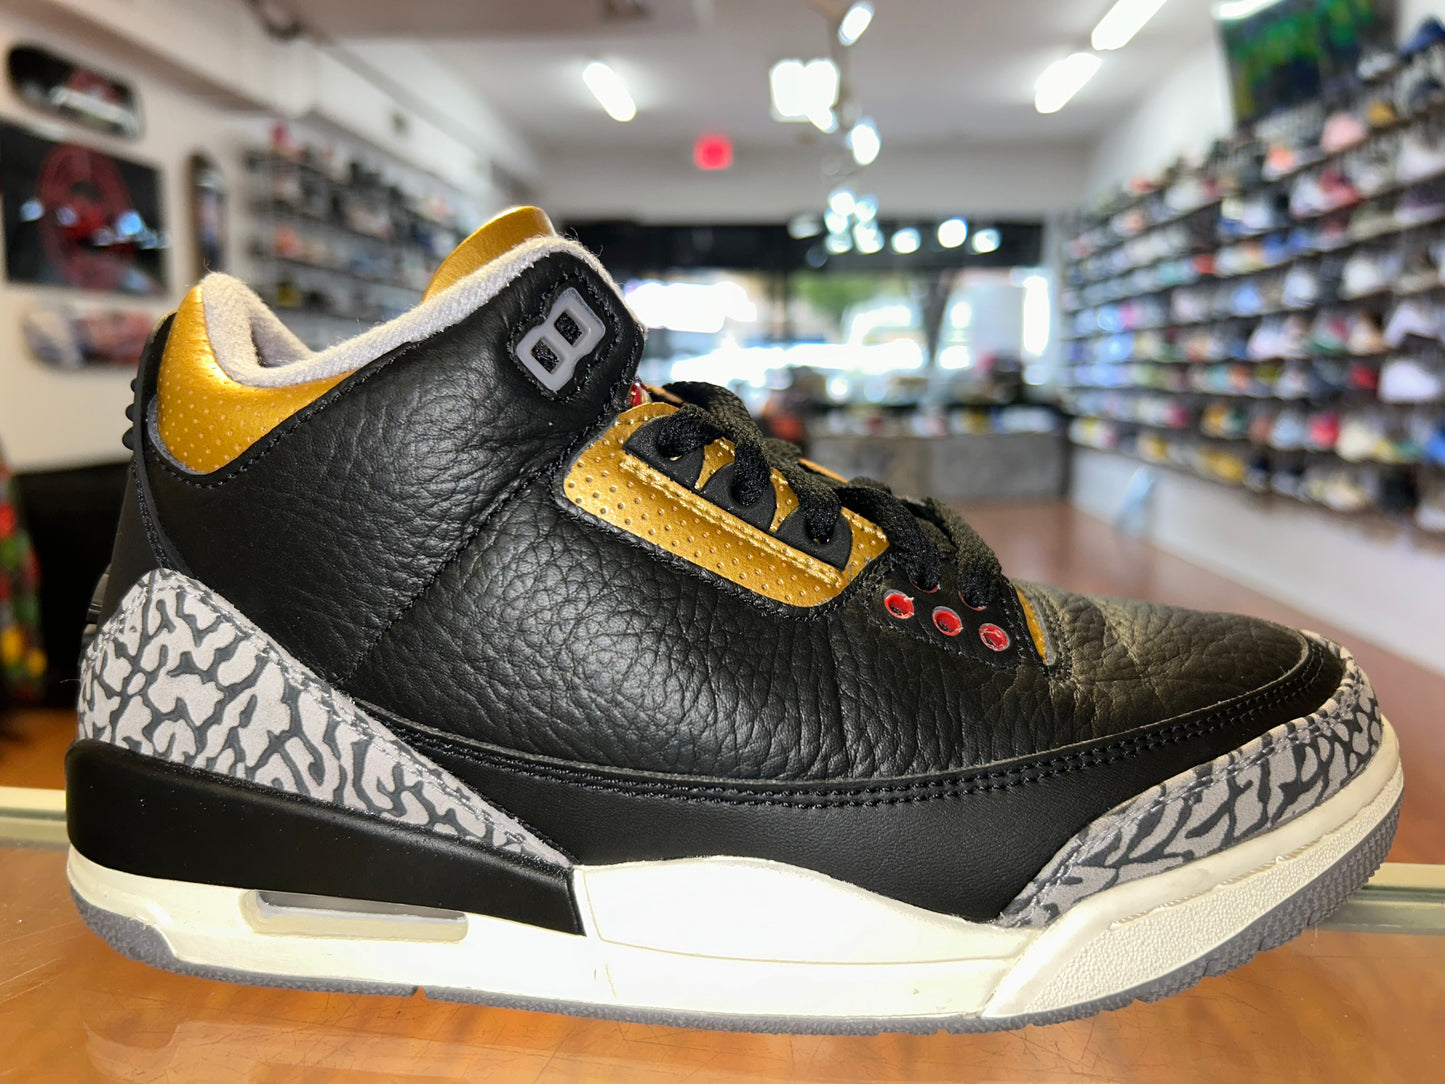 Size 6 (7.5W) Air Jordan 3 “Gold Cement” (MAMO)